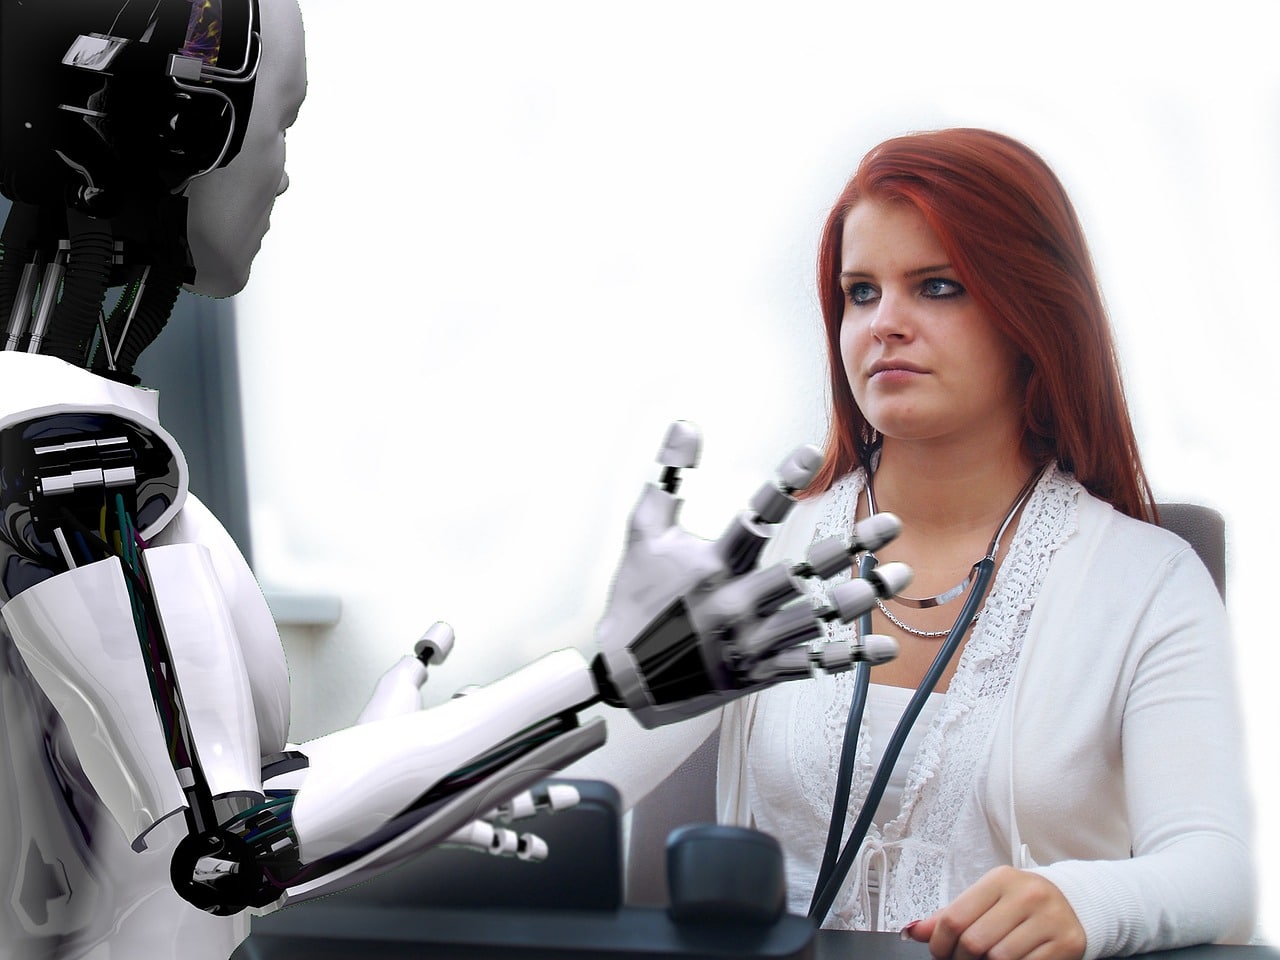 Robots Human Element Header Image